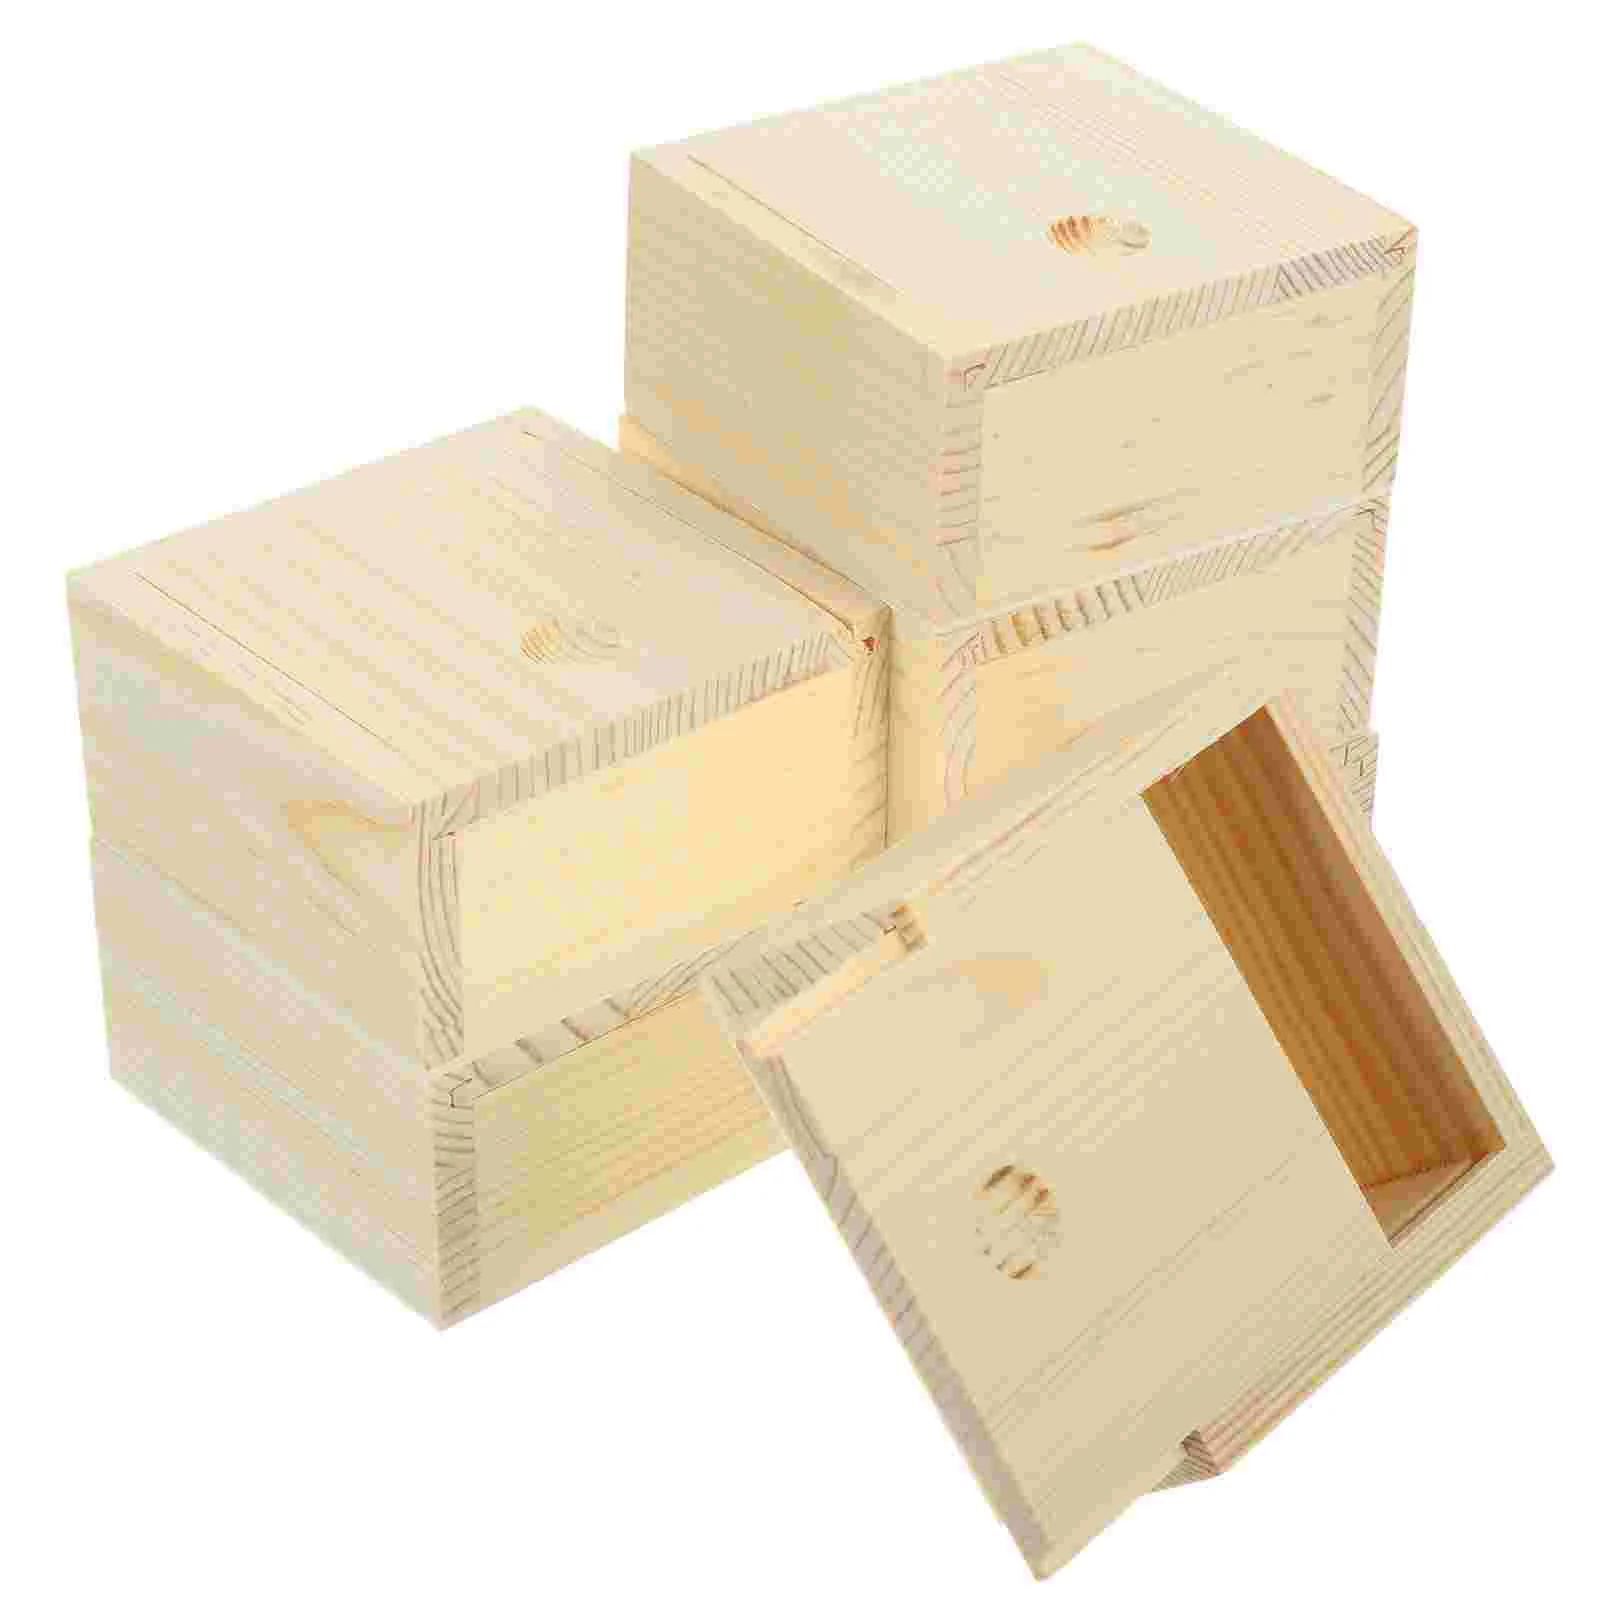 

10 Pcs Small Wooden Box Cosmetics Storage Container Items Organizer Pine Practical Case Desktop Travel